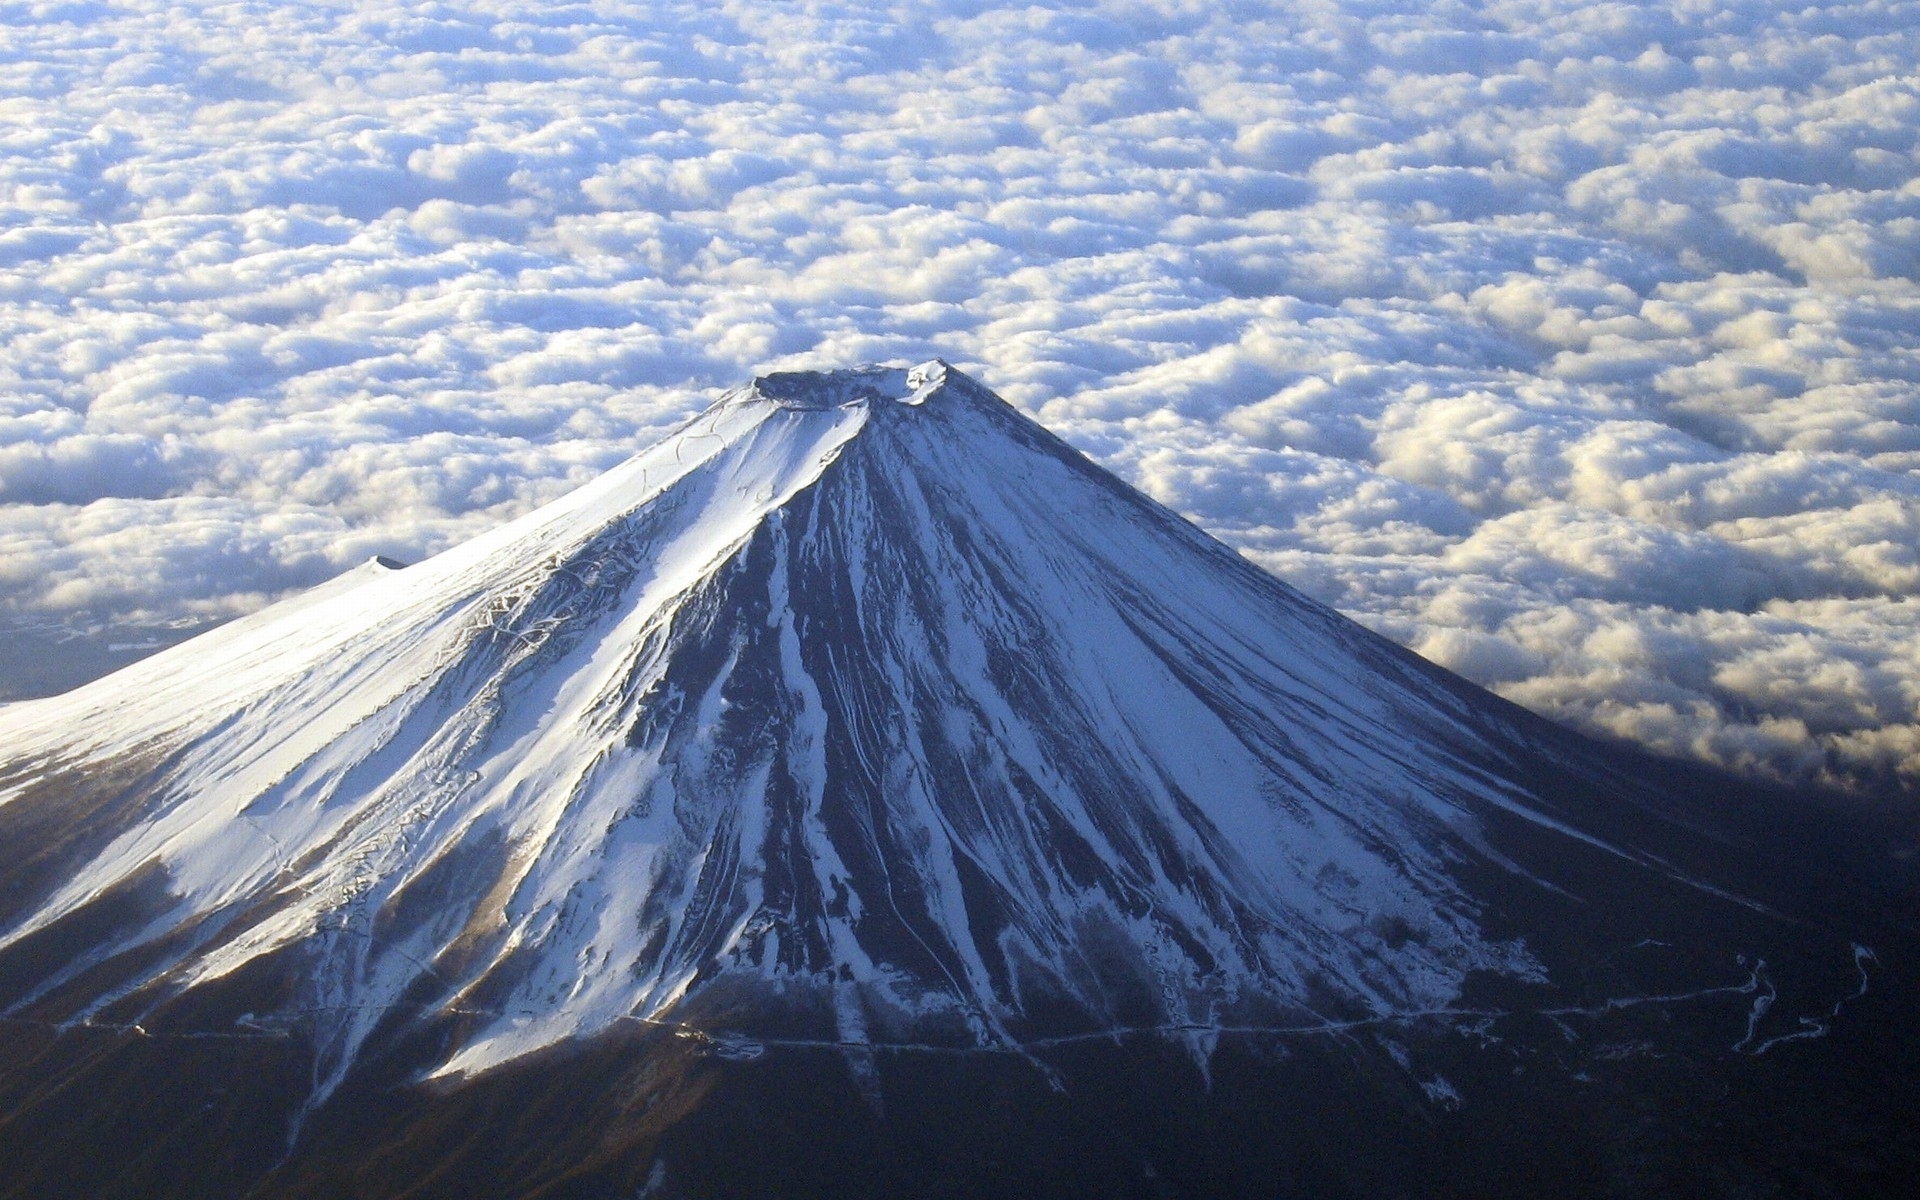 HD Mount Fuji Japan Wallpaper HDwallsource